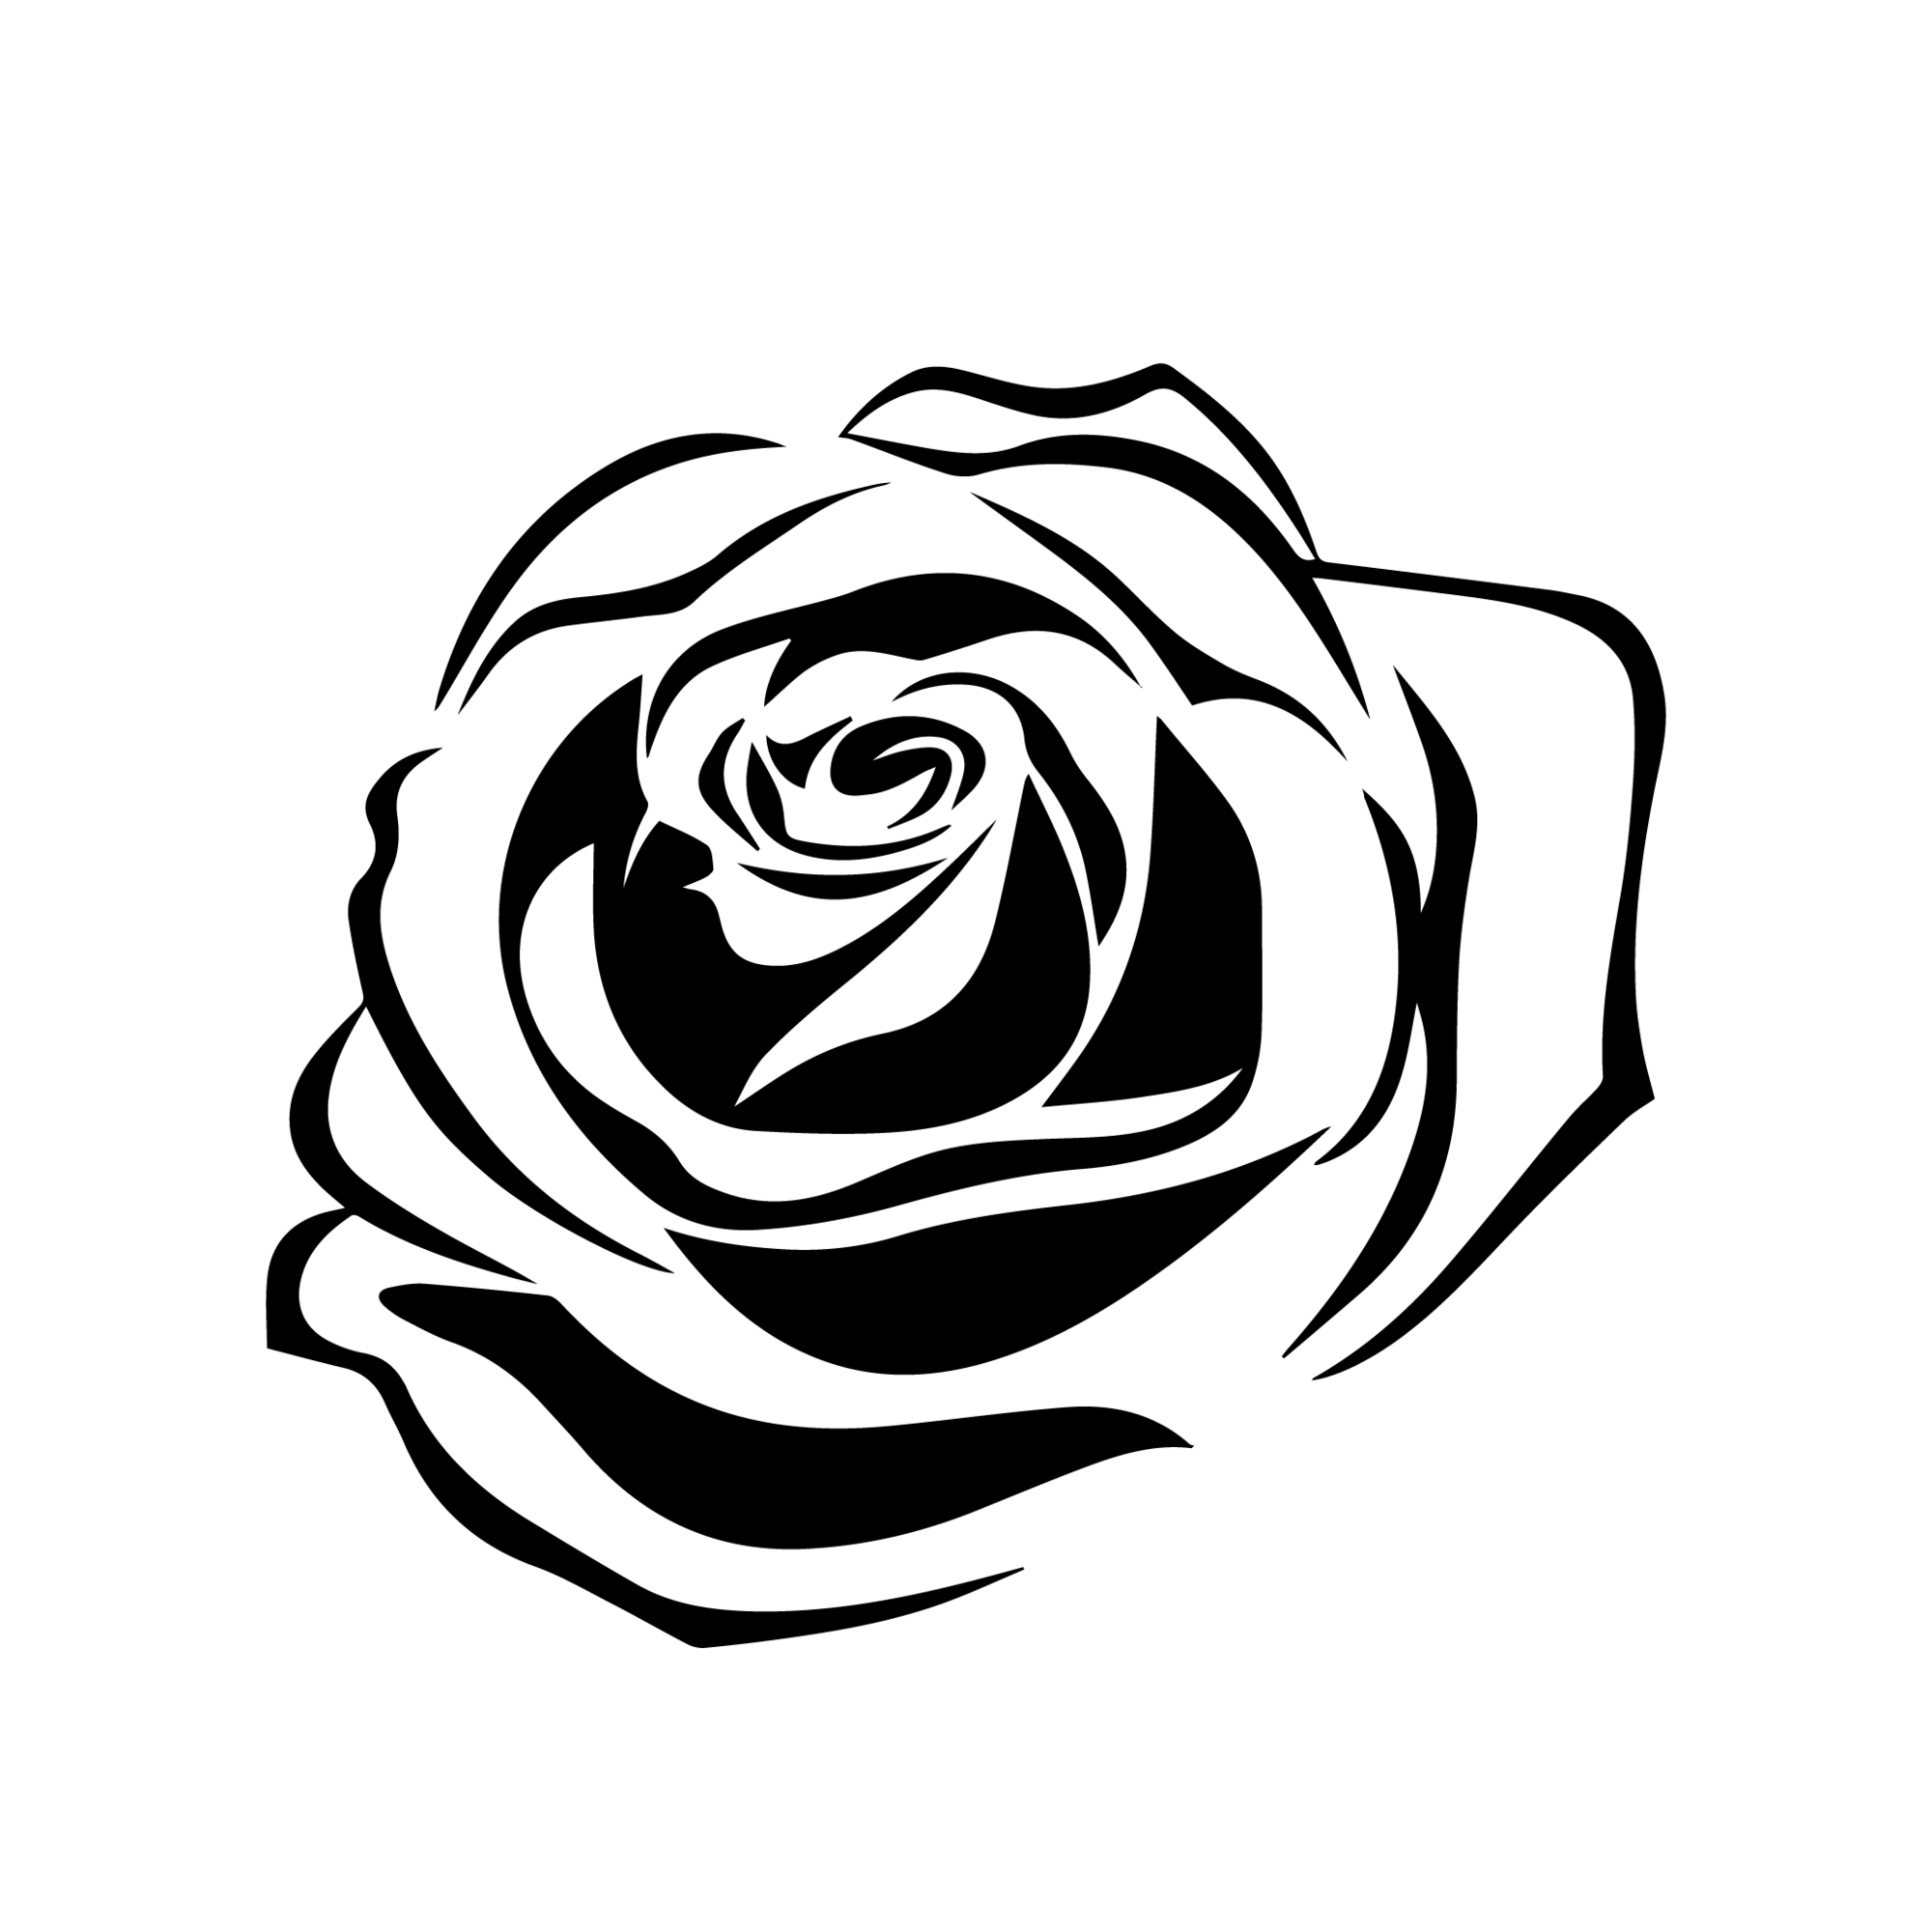 Art - rose tattoo png download - 2000*2000 - Free Transparent Art png